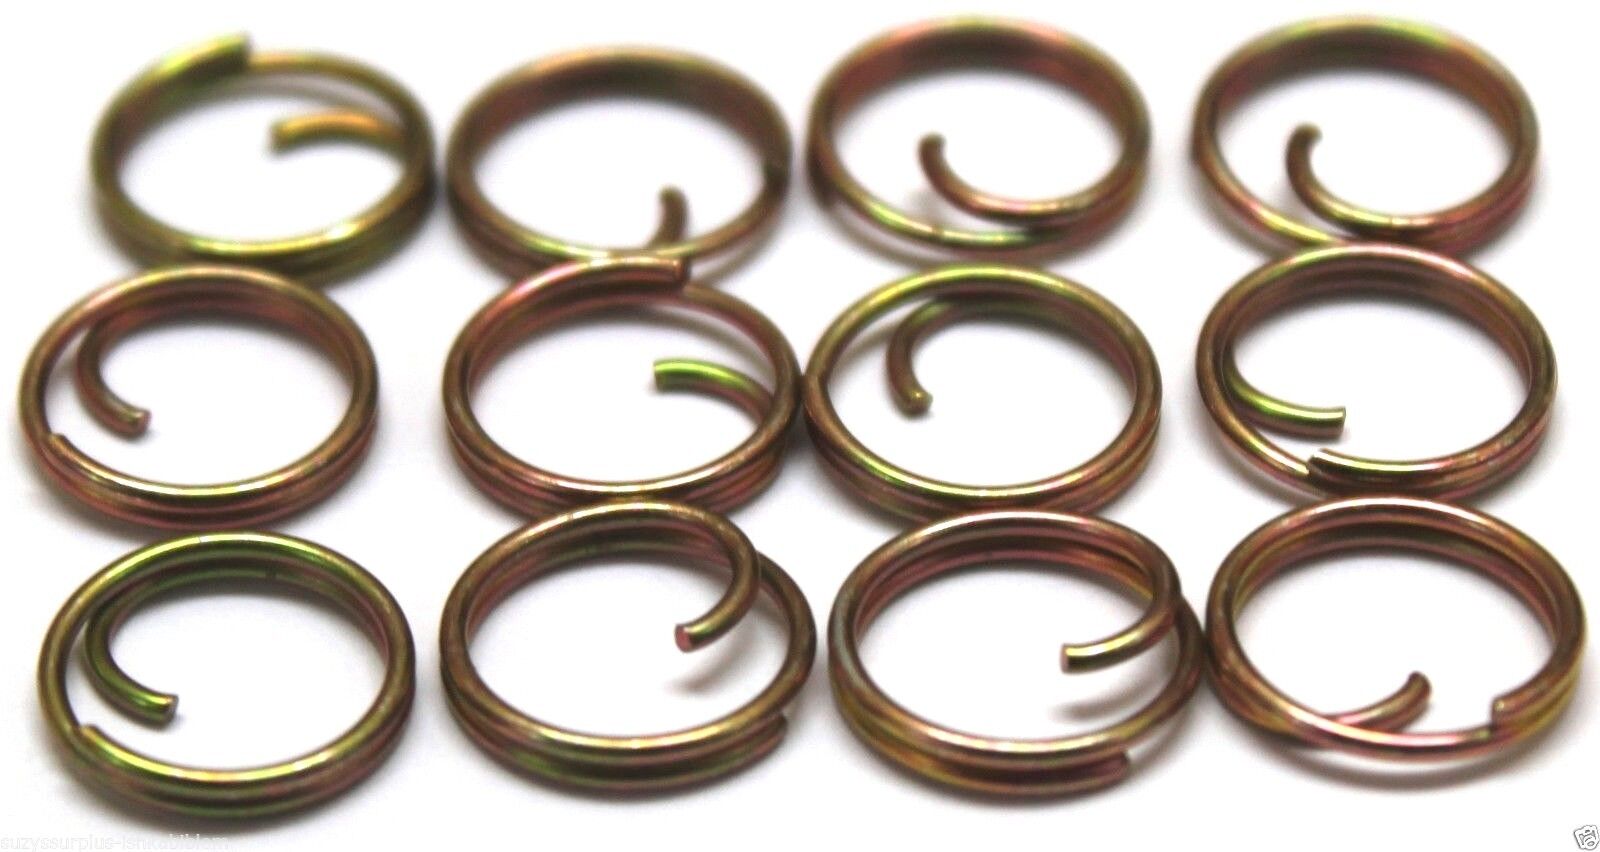 mil-spec 7/16in 13mm zinc uniform button rings fasteners no sew lot of 12 B115